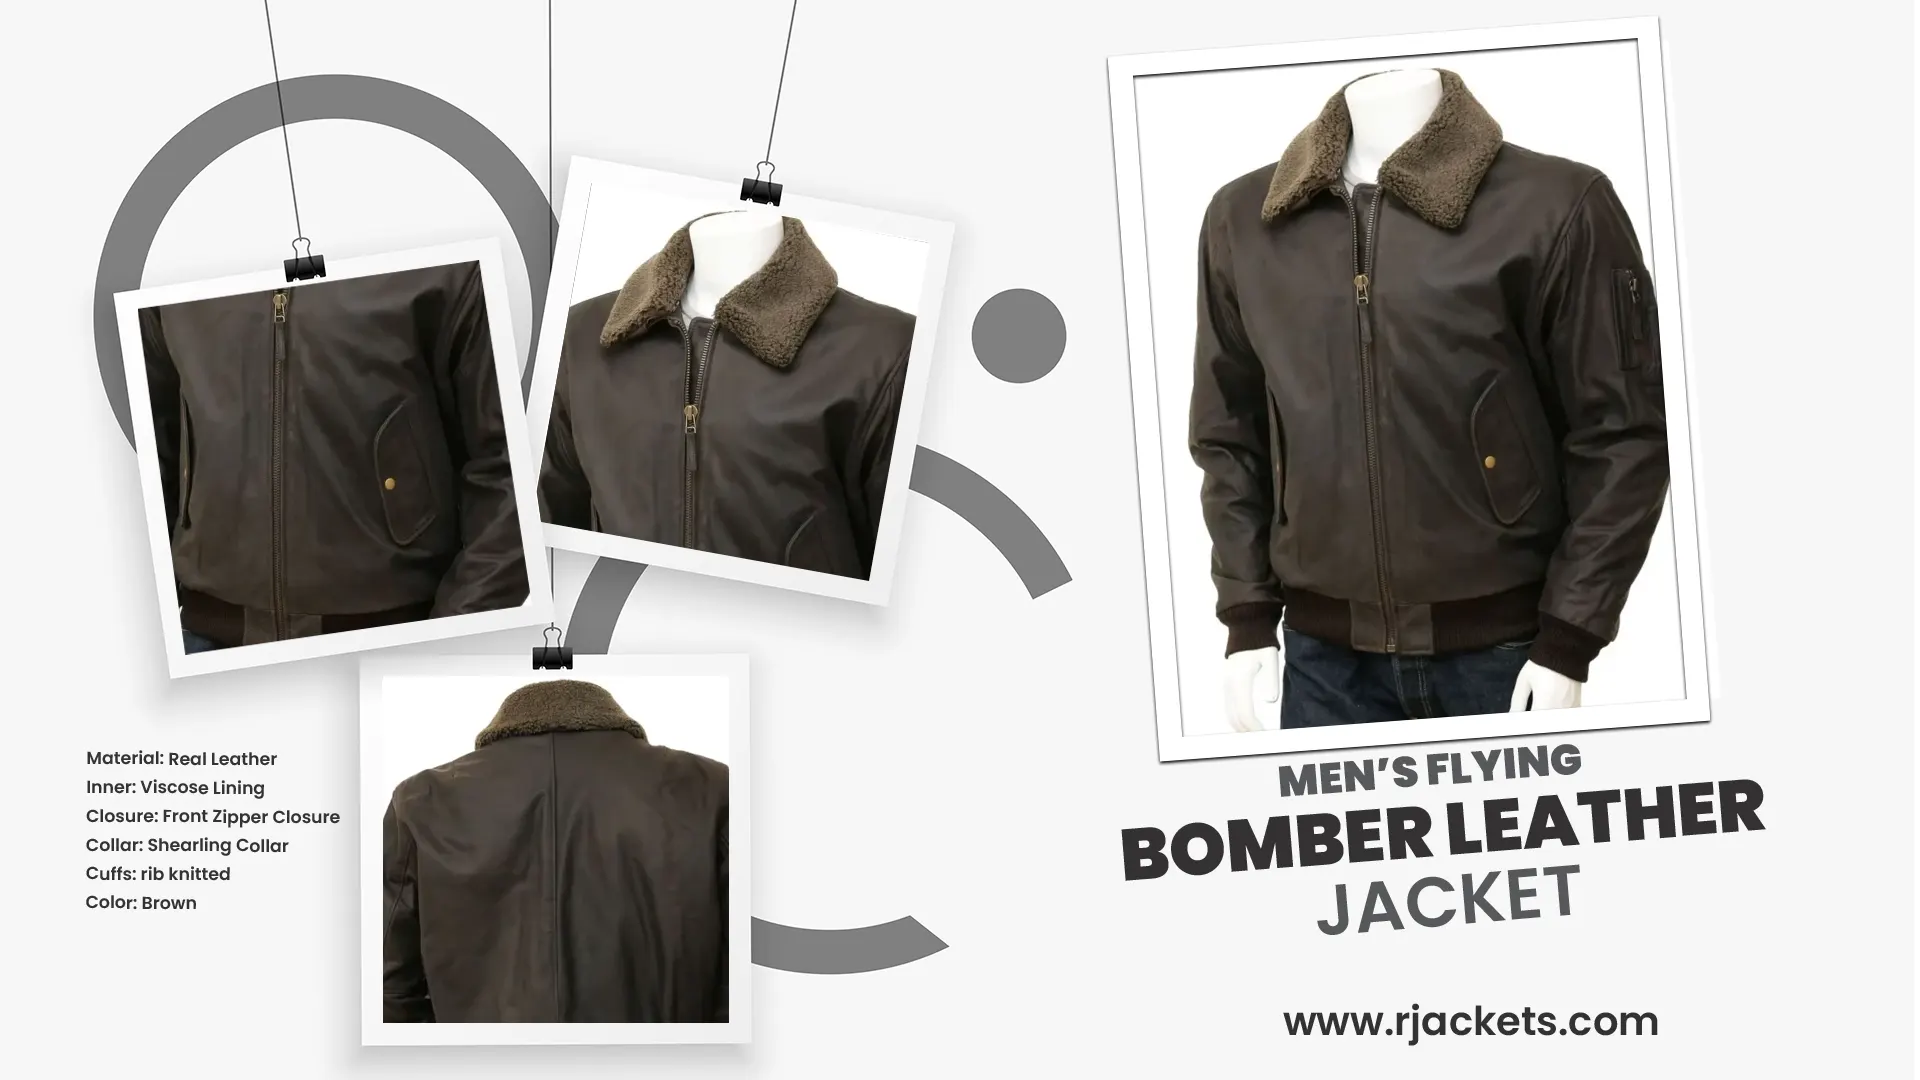 Men’s Flying Bomber Leather Jacket